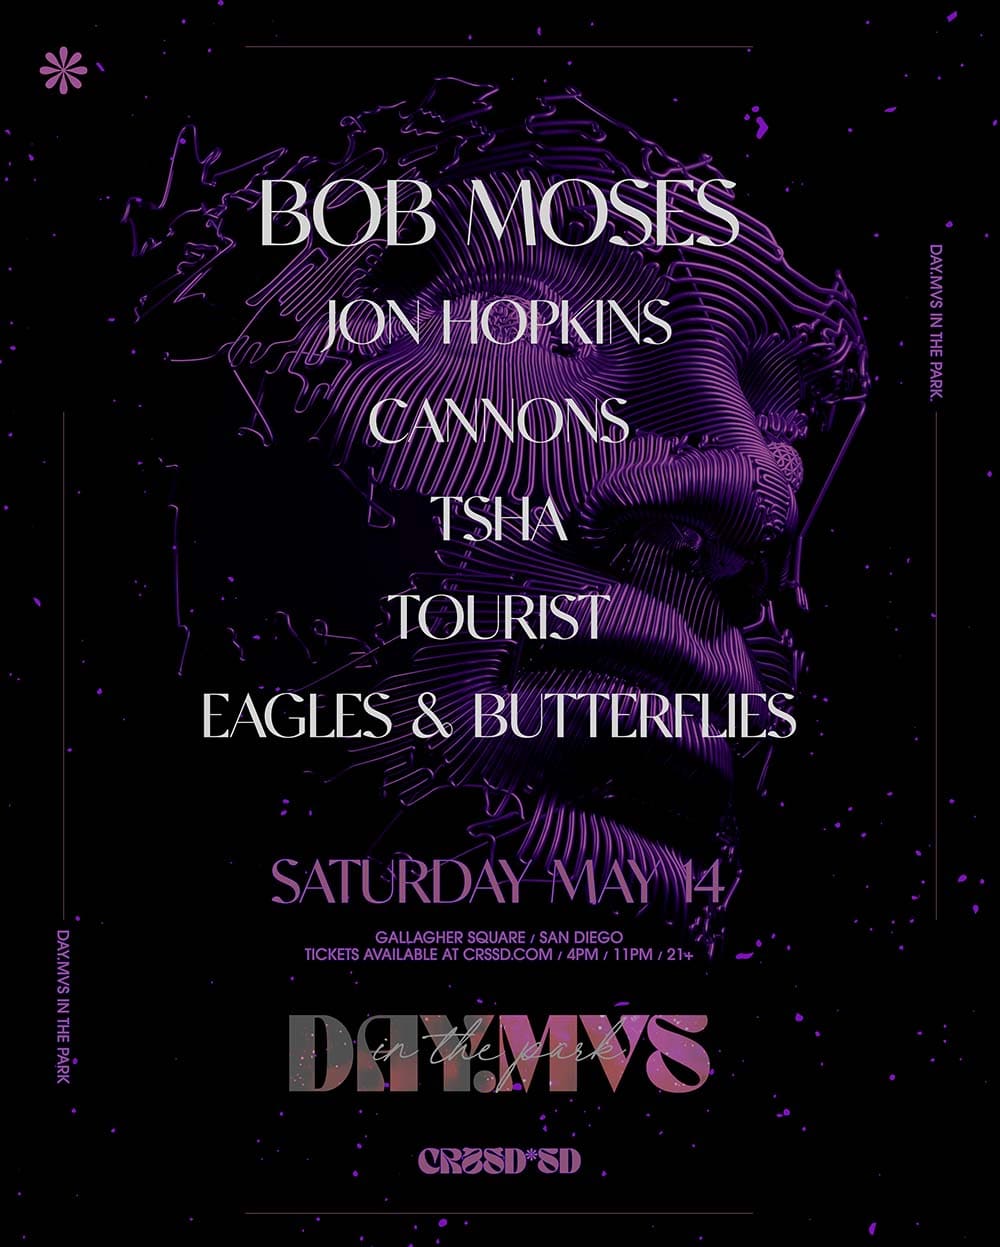 DAY.MVS: Bob Moses